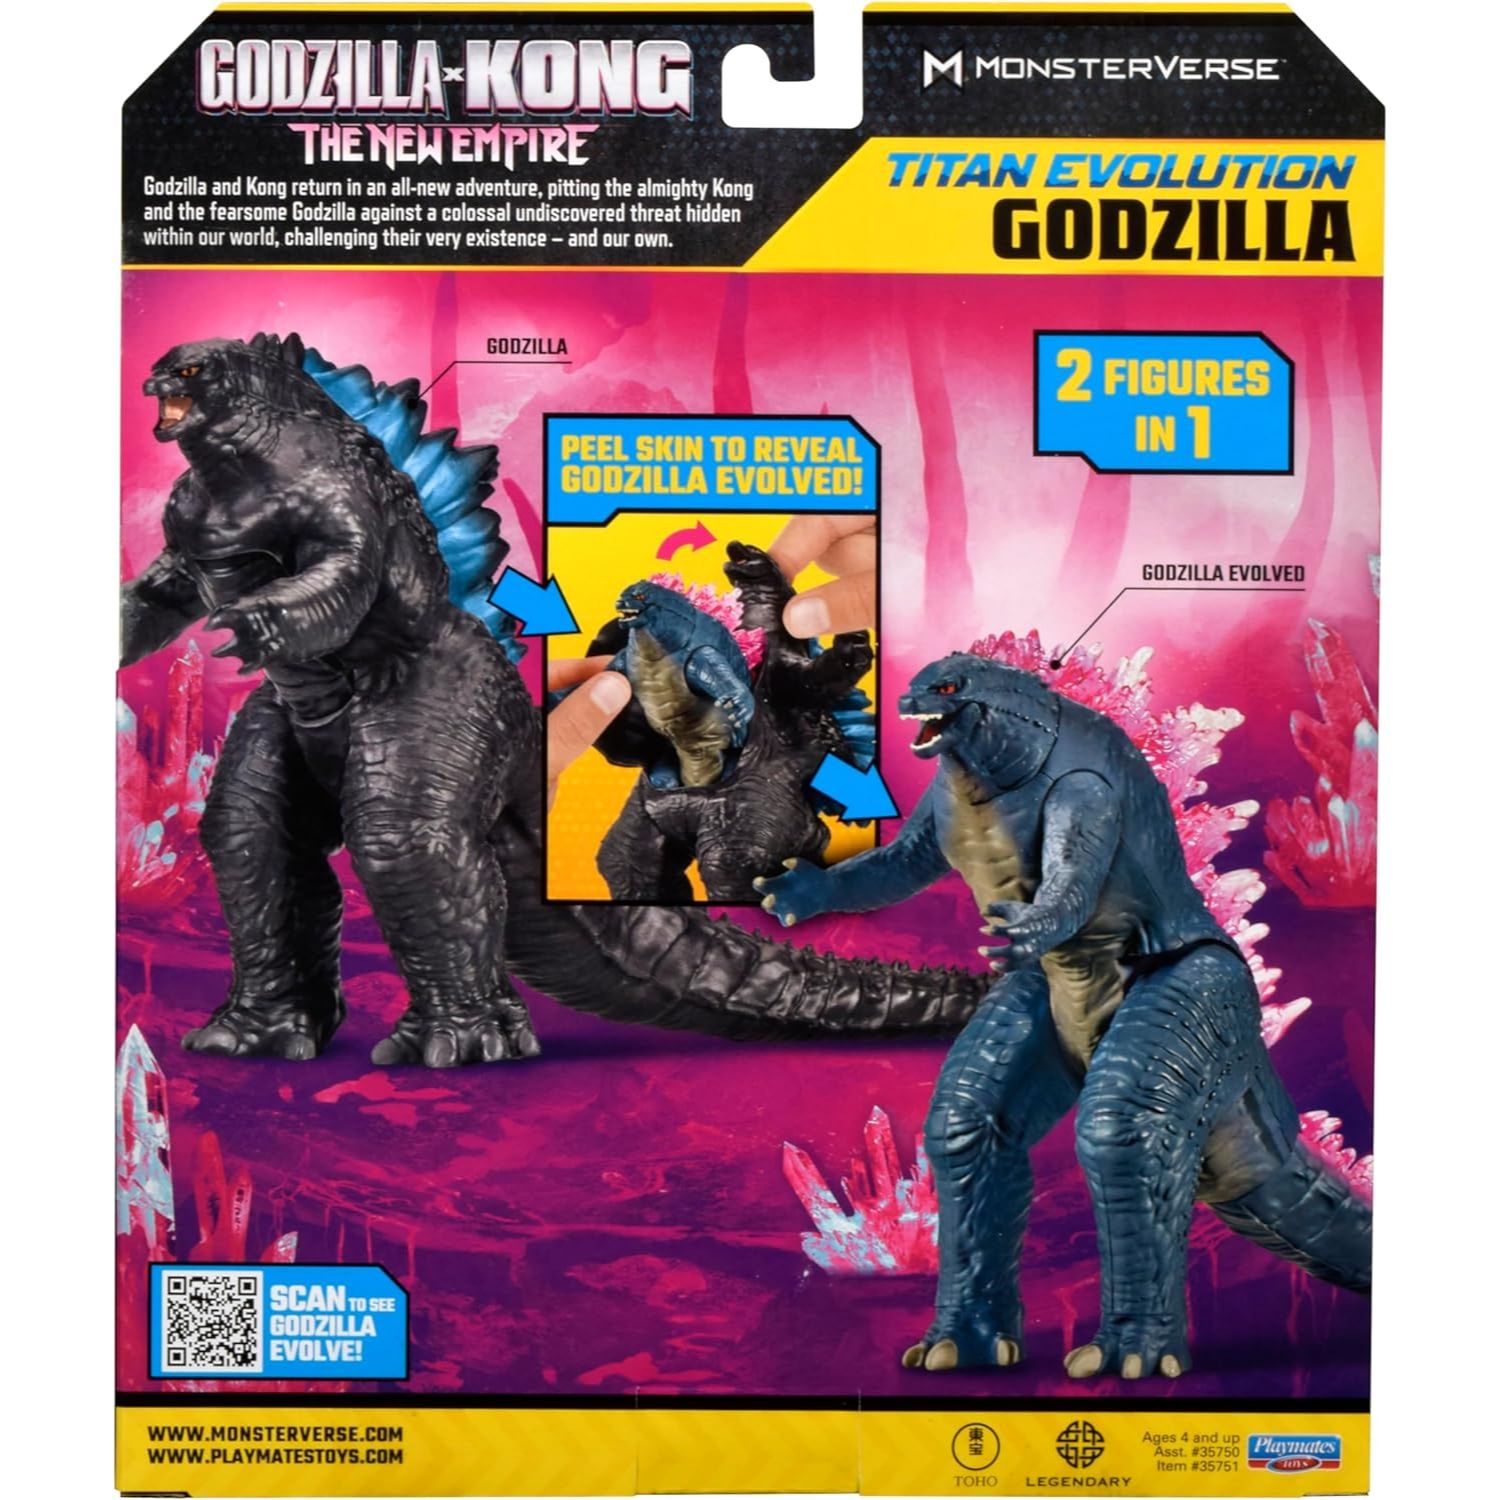 Godzilla x Kong : The New Empire - 7" Titan Evolution Godzilla (peel skin to reveal Godzilla evolved)